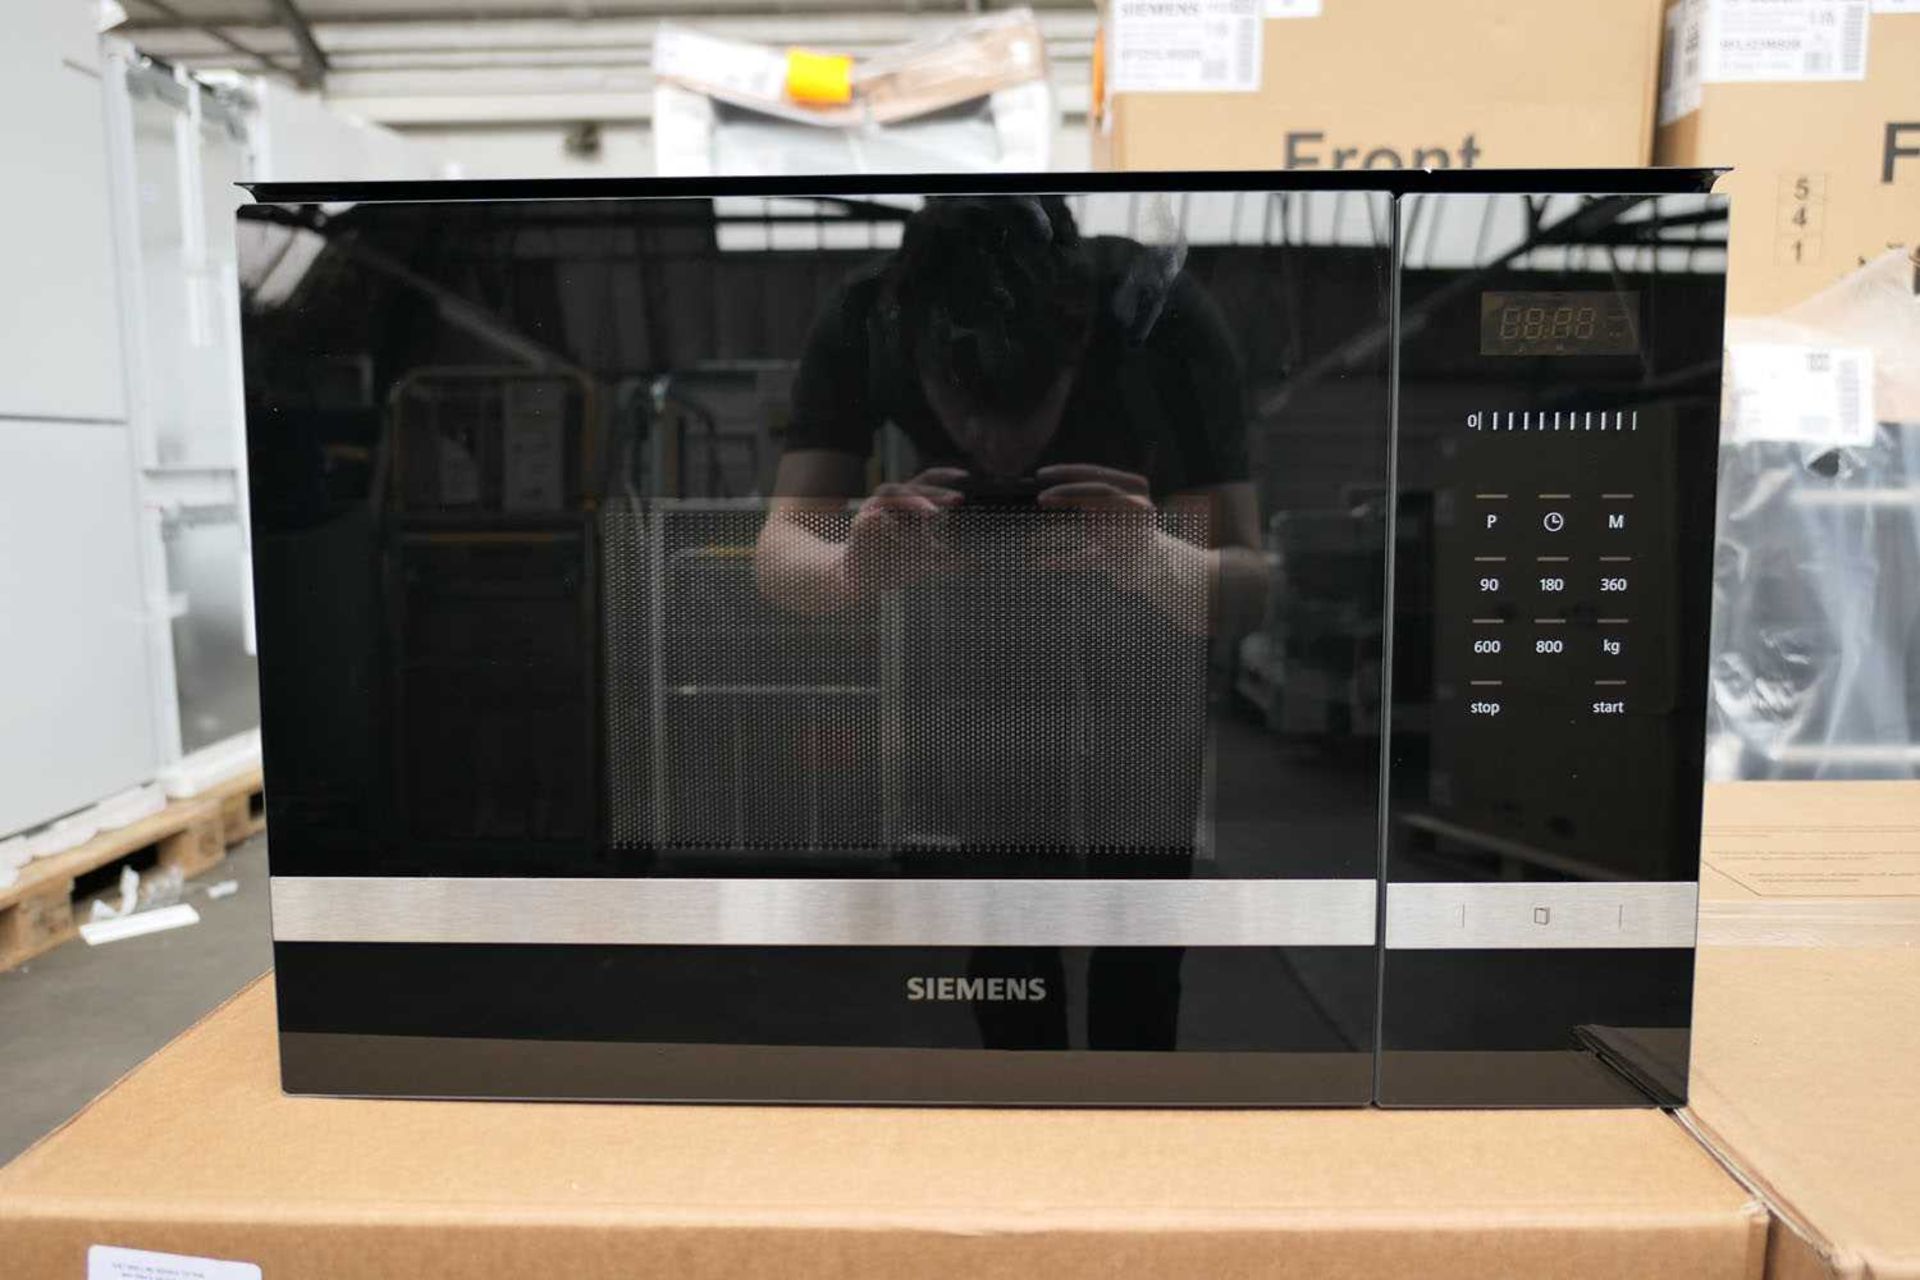 +VAT BF525LMS0BB Siemens Built-in microwave oven